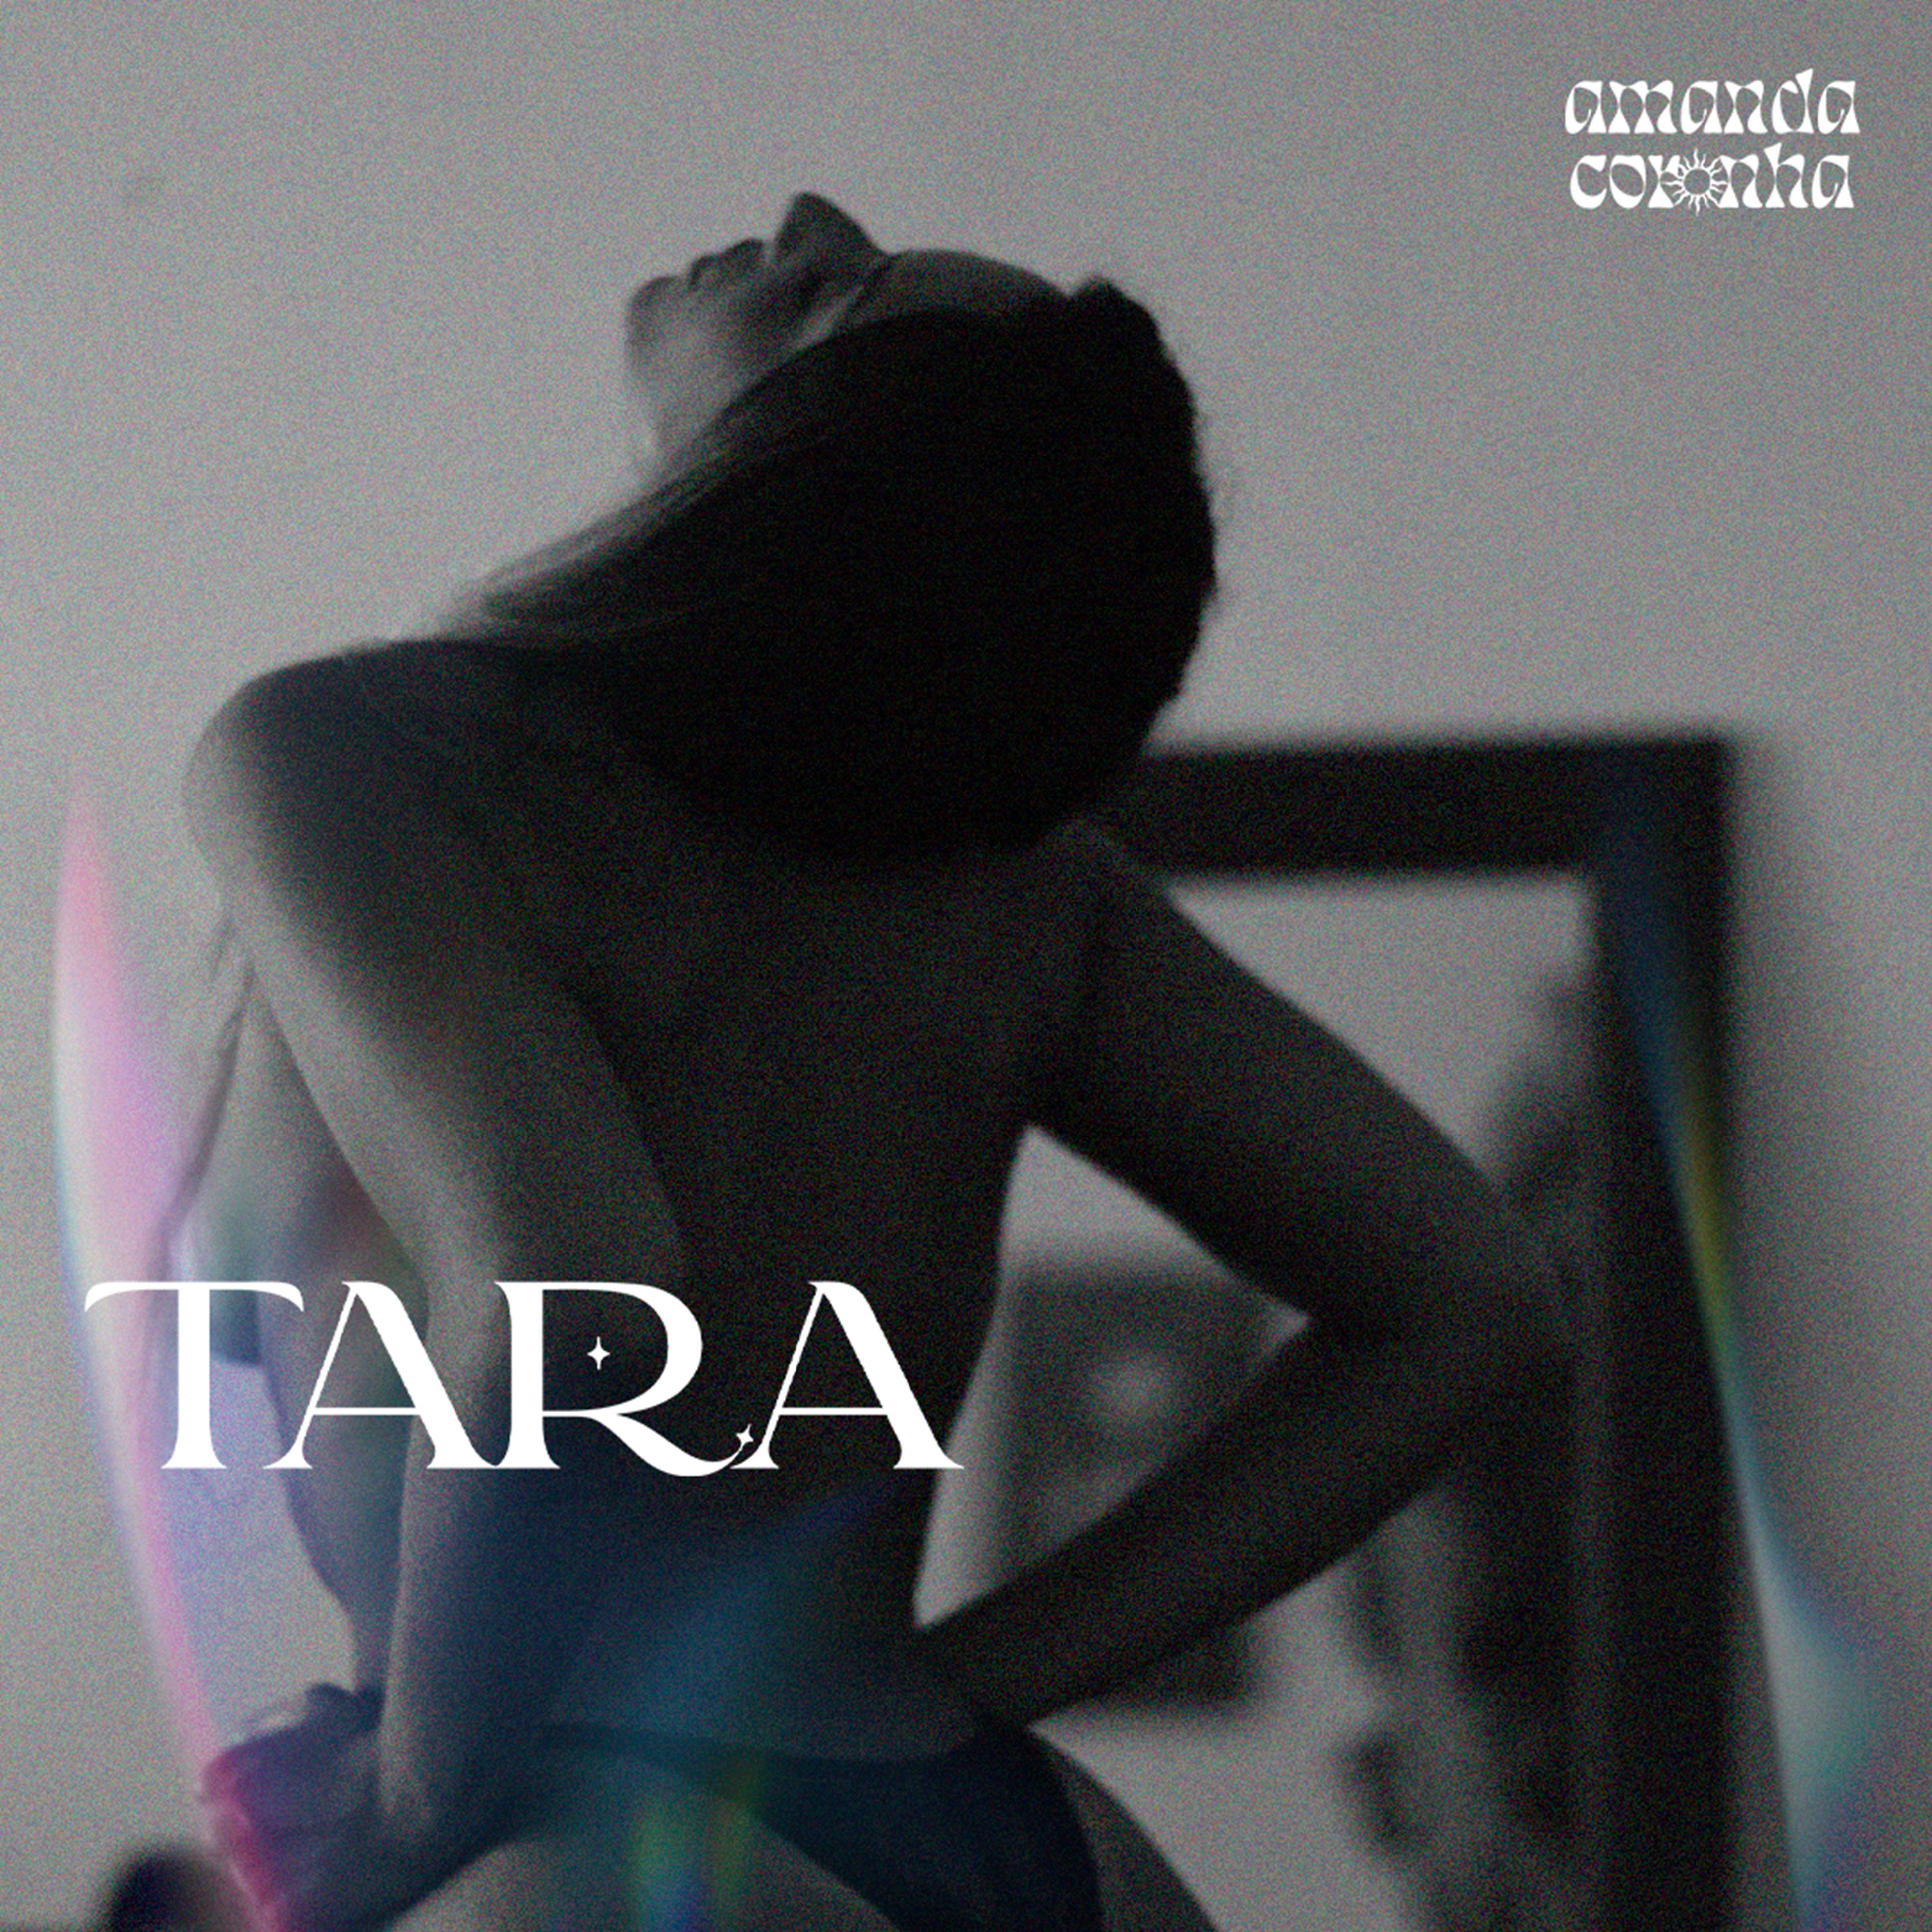 Capa do videoclipe da música Tara de Amanda Coronha